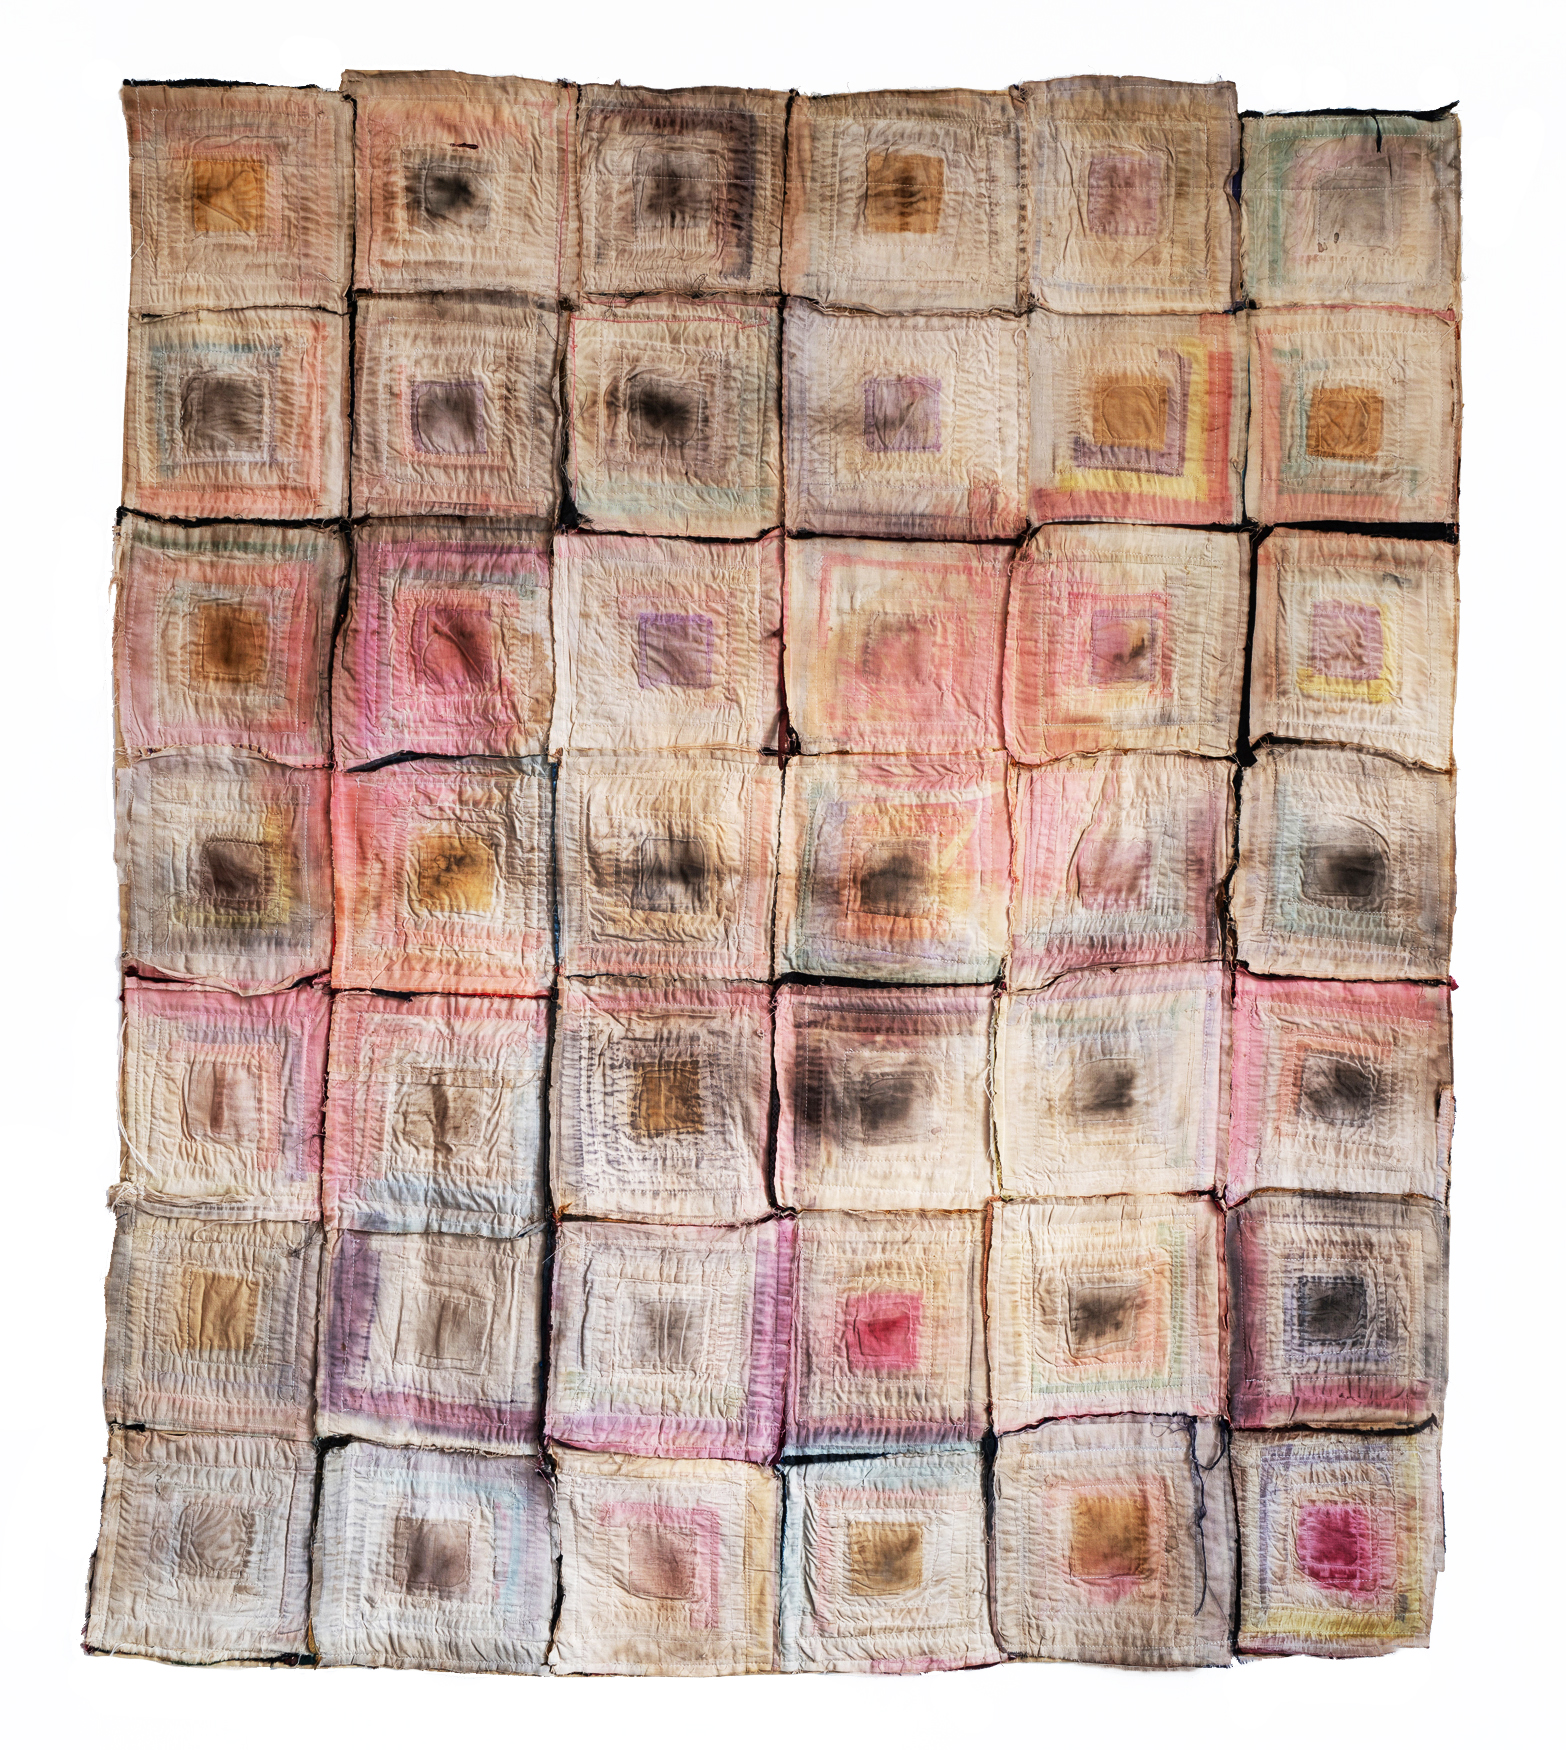 Maya Balcioglu 42 quads (2022) Burnt cotton, fabric dye, ink 142 cm x 123 cm